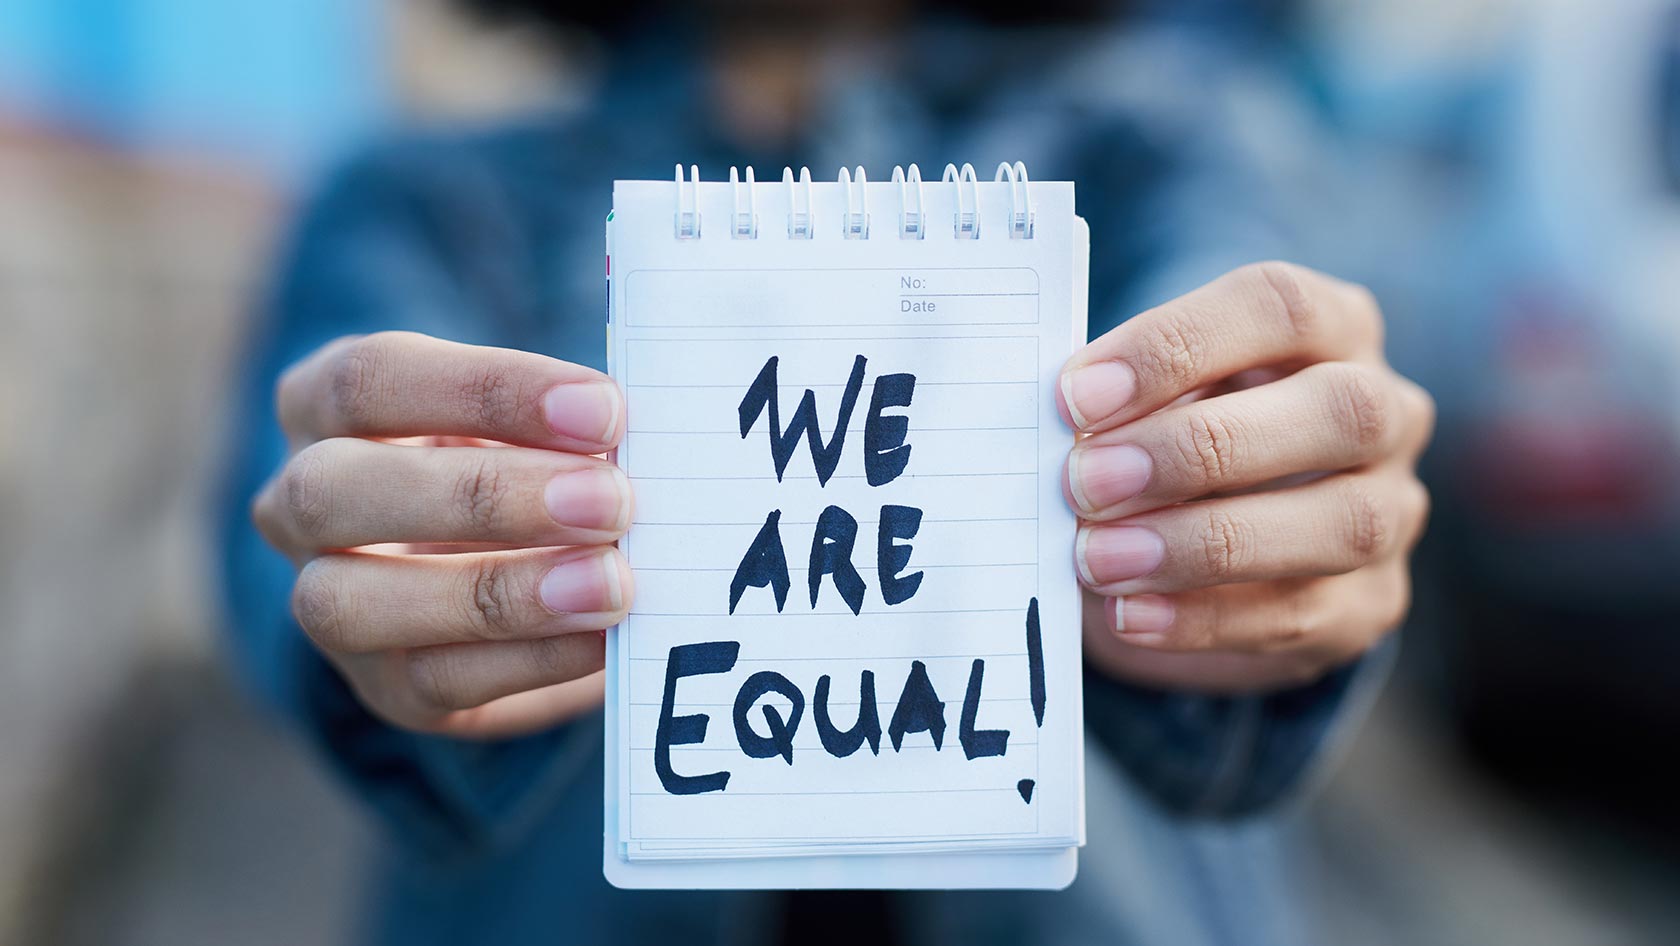 Notiz "We are equal!"